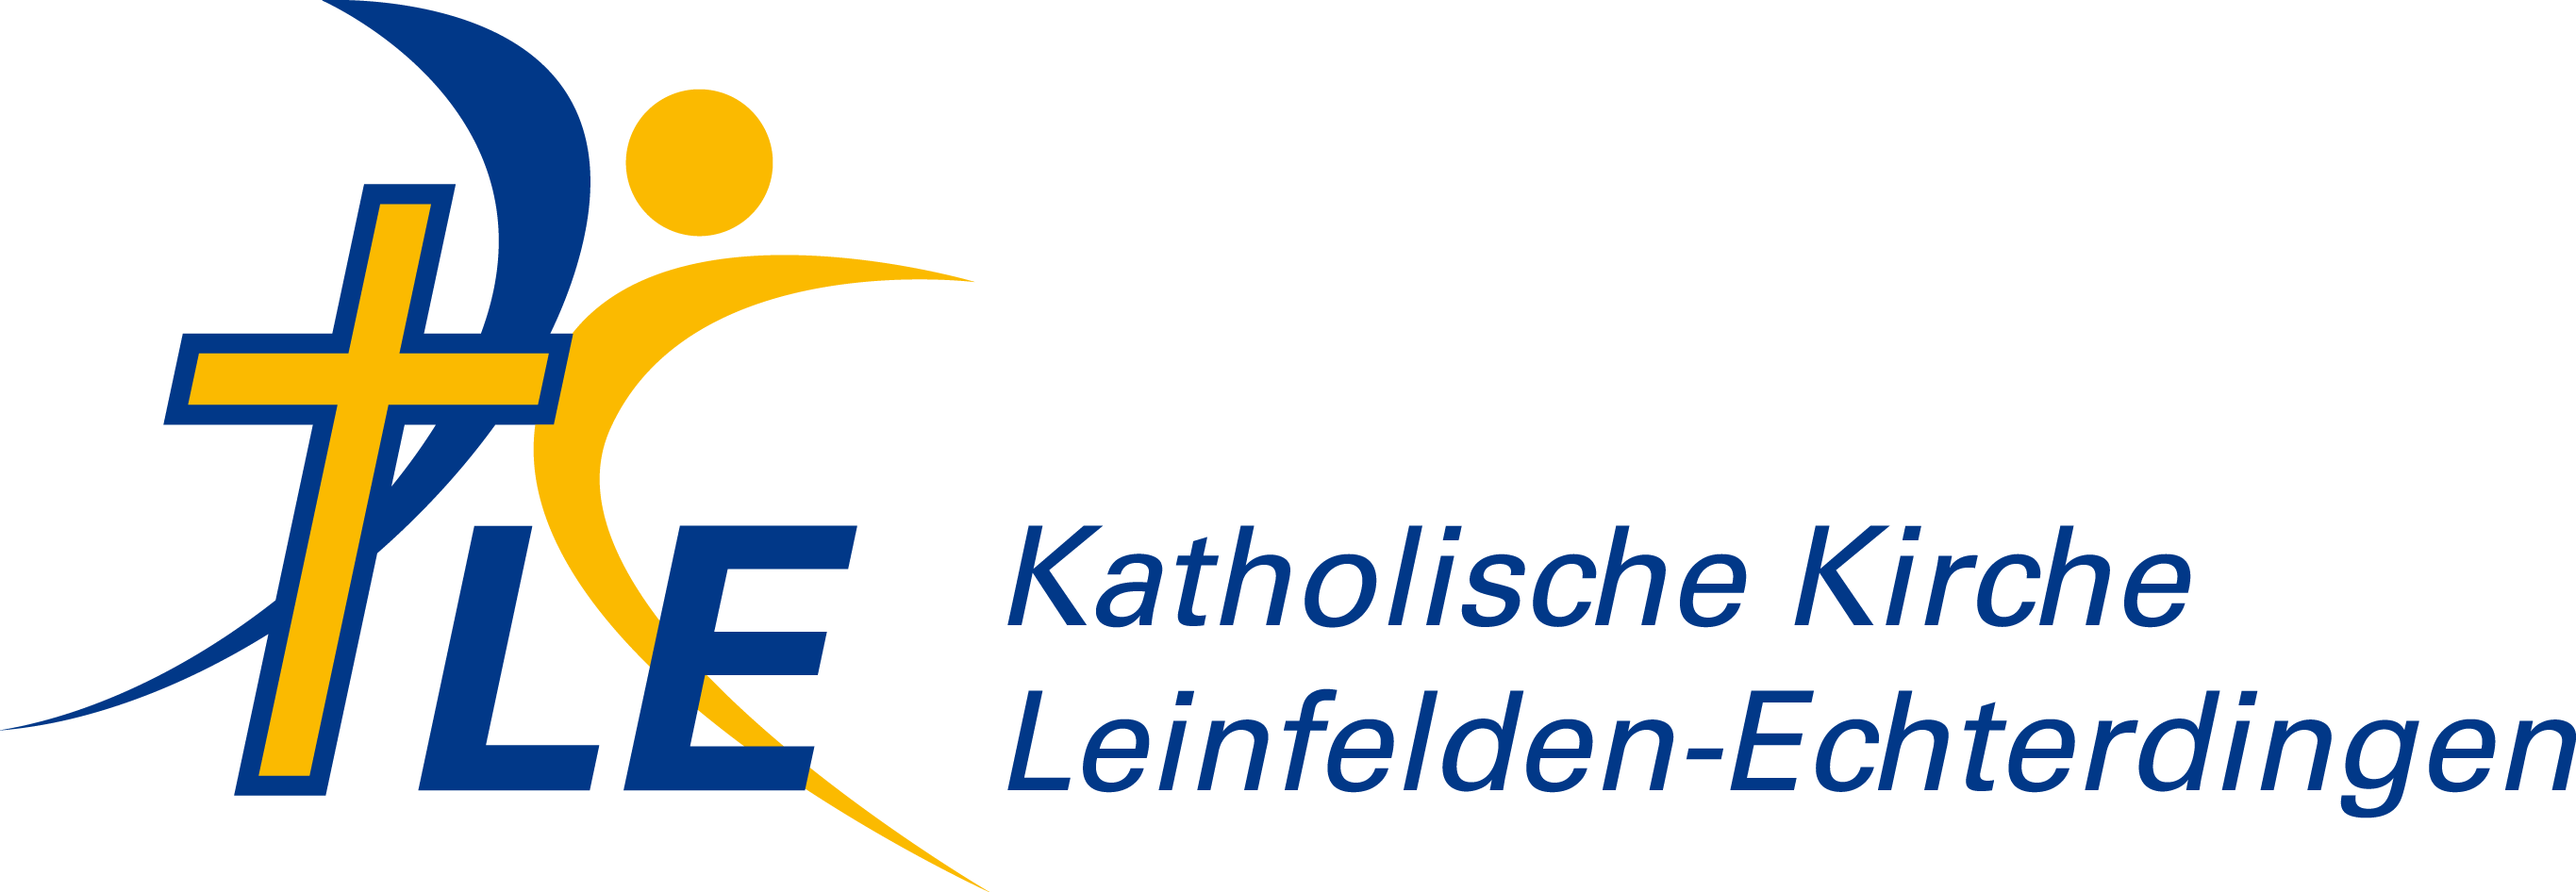 Katholische Kirche Leinfelden-Echterdingen